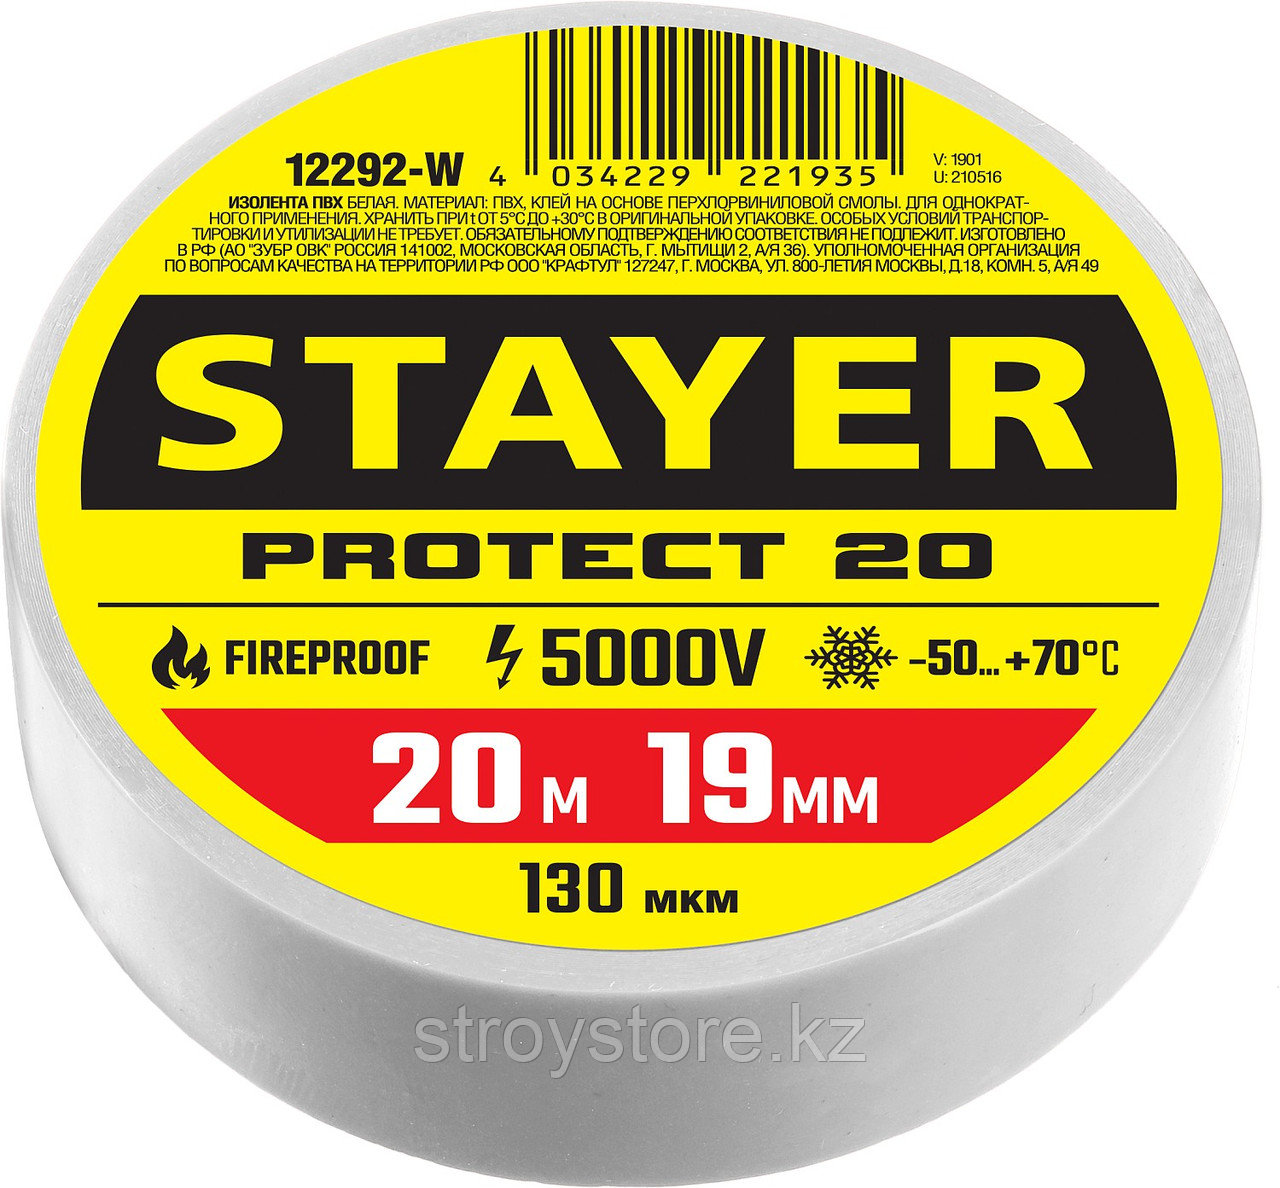 STAYER Protect-20 19 мм х 20 м белая, Изоляционная лента ПВХ, PROFESSIONAL (12292-W), фото 1